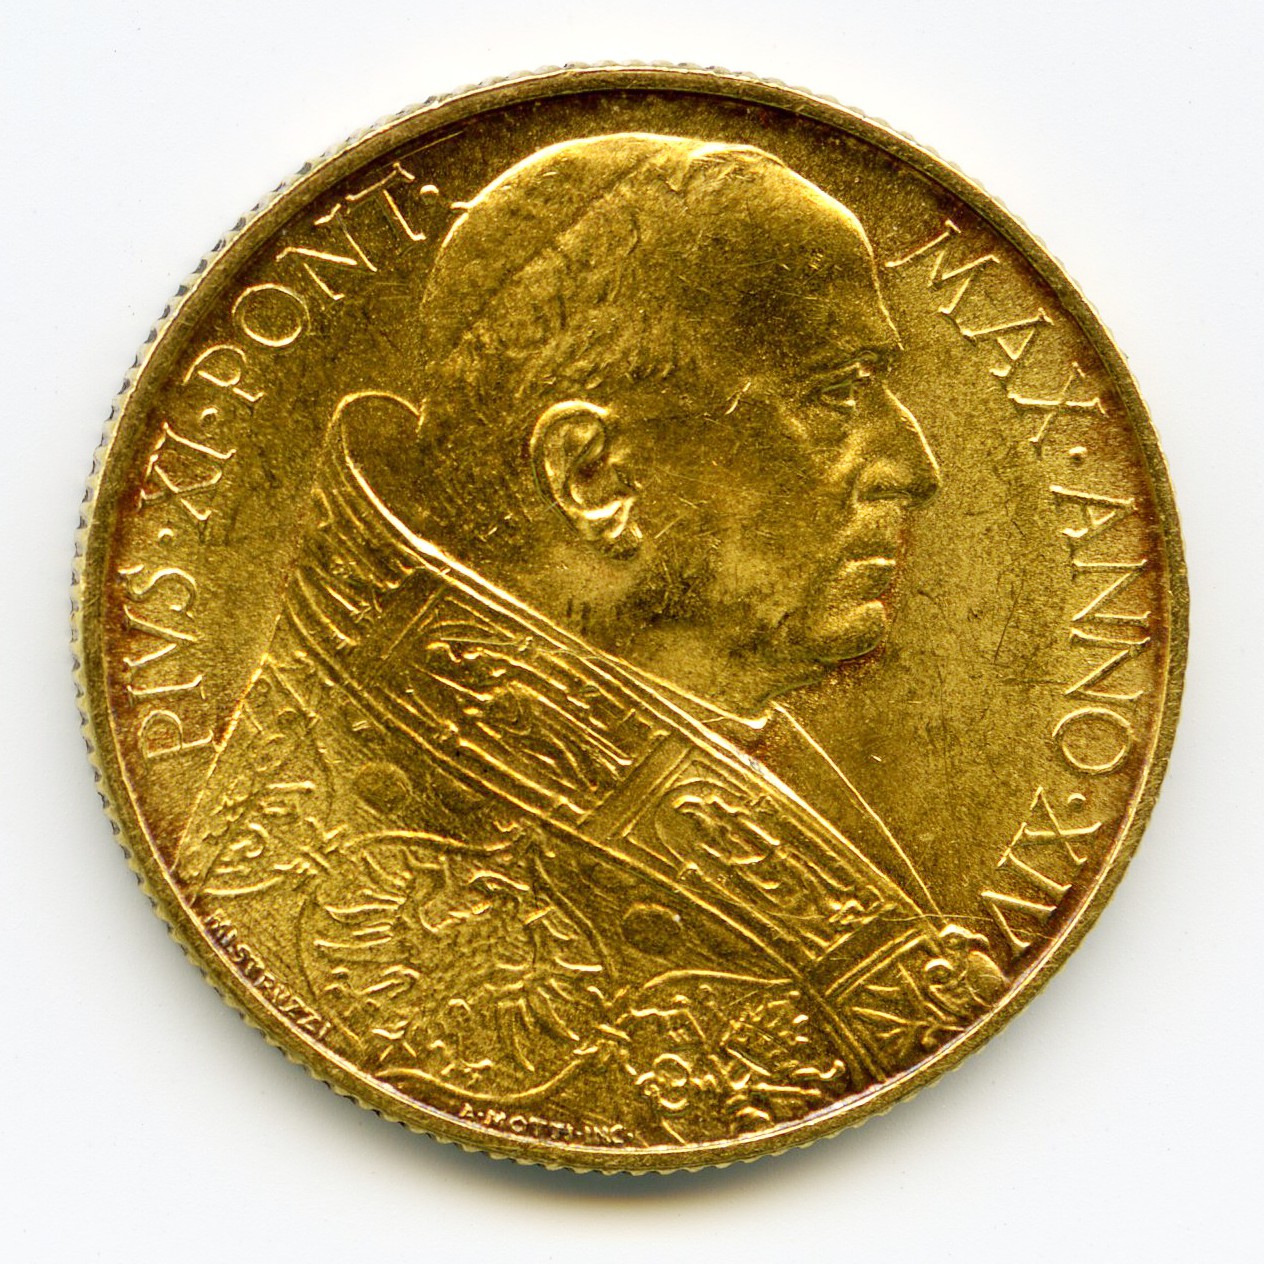 Italie - 100 Lire - 1935 R avers